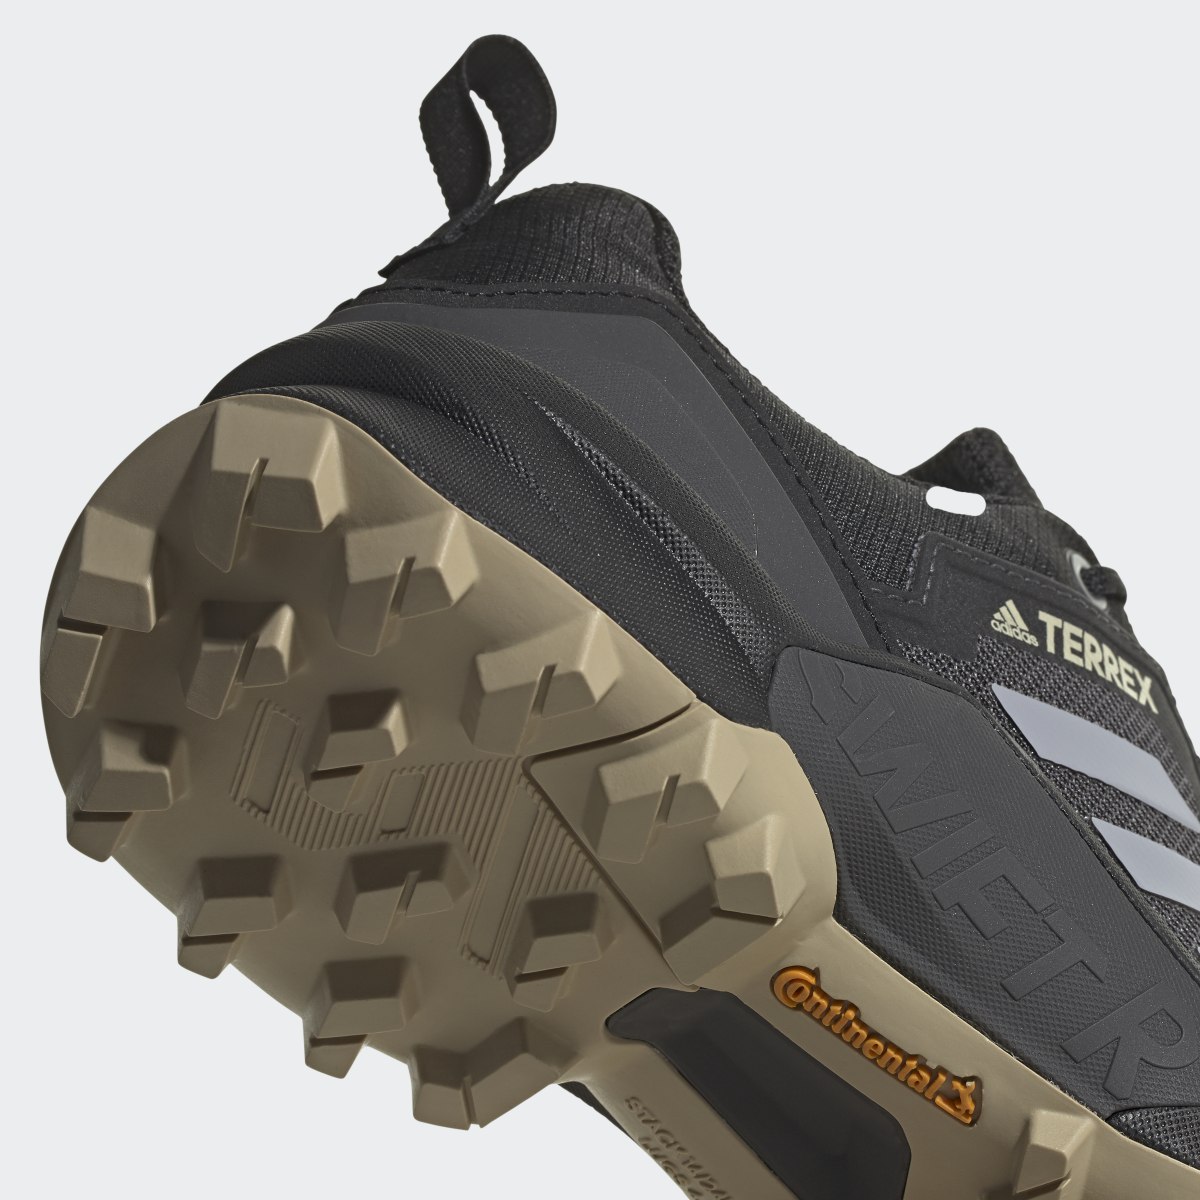 Adidas Terrex Swift R3 GORE-TEX Hiking Shoes. 10